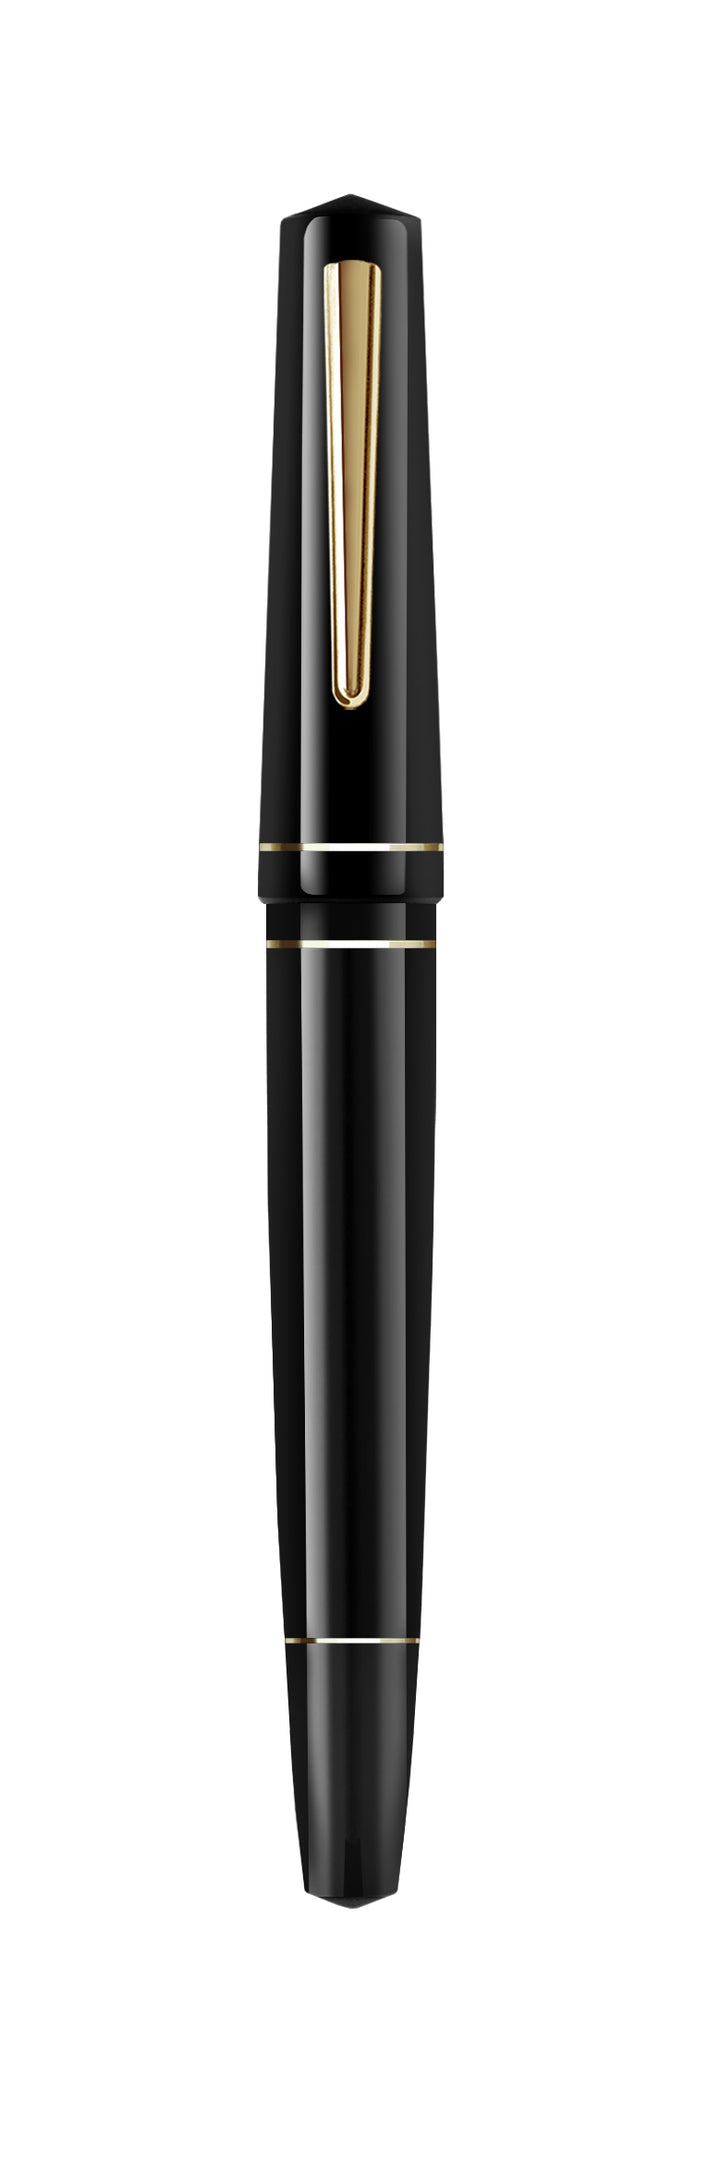 Maiora Impronte Mirror Black Fountain Pen